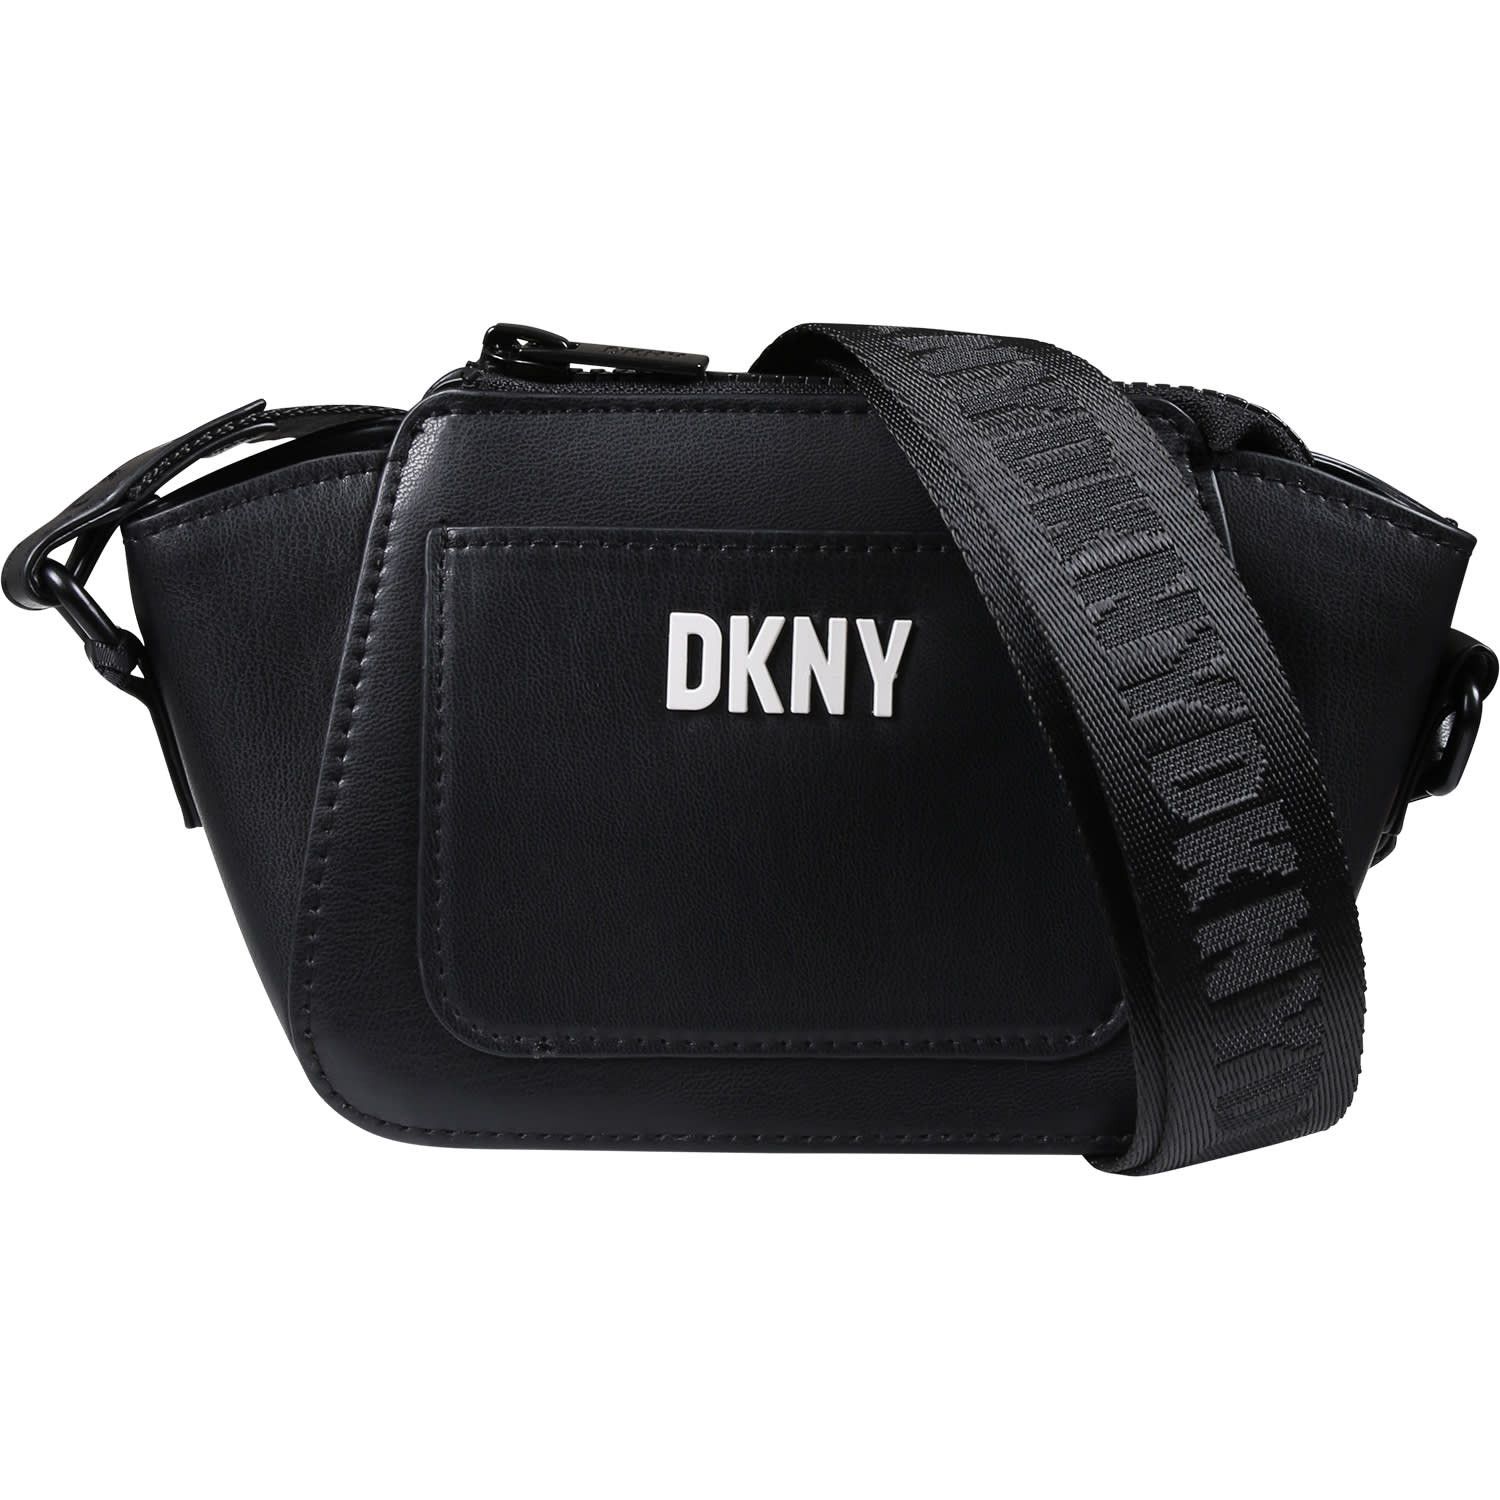 DKNY Black Bag For Girl With Logo | Italist.com US